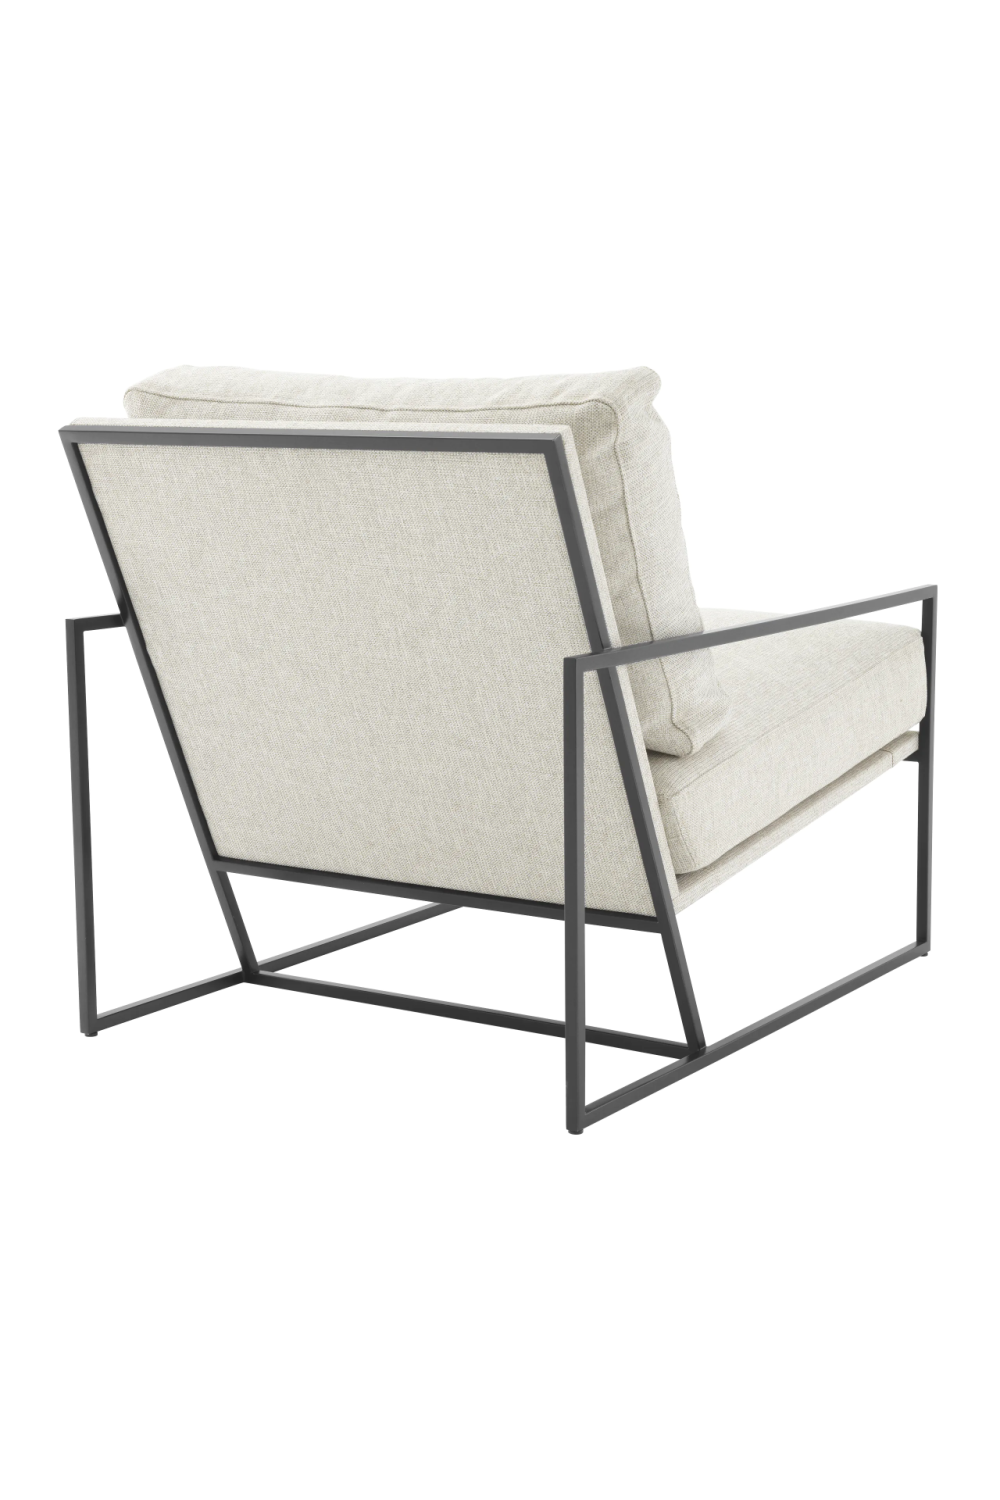 White Modern Minimalist Lounge Chair | Eichholtz Rowen | Oroa.com